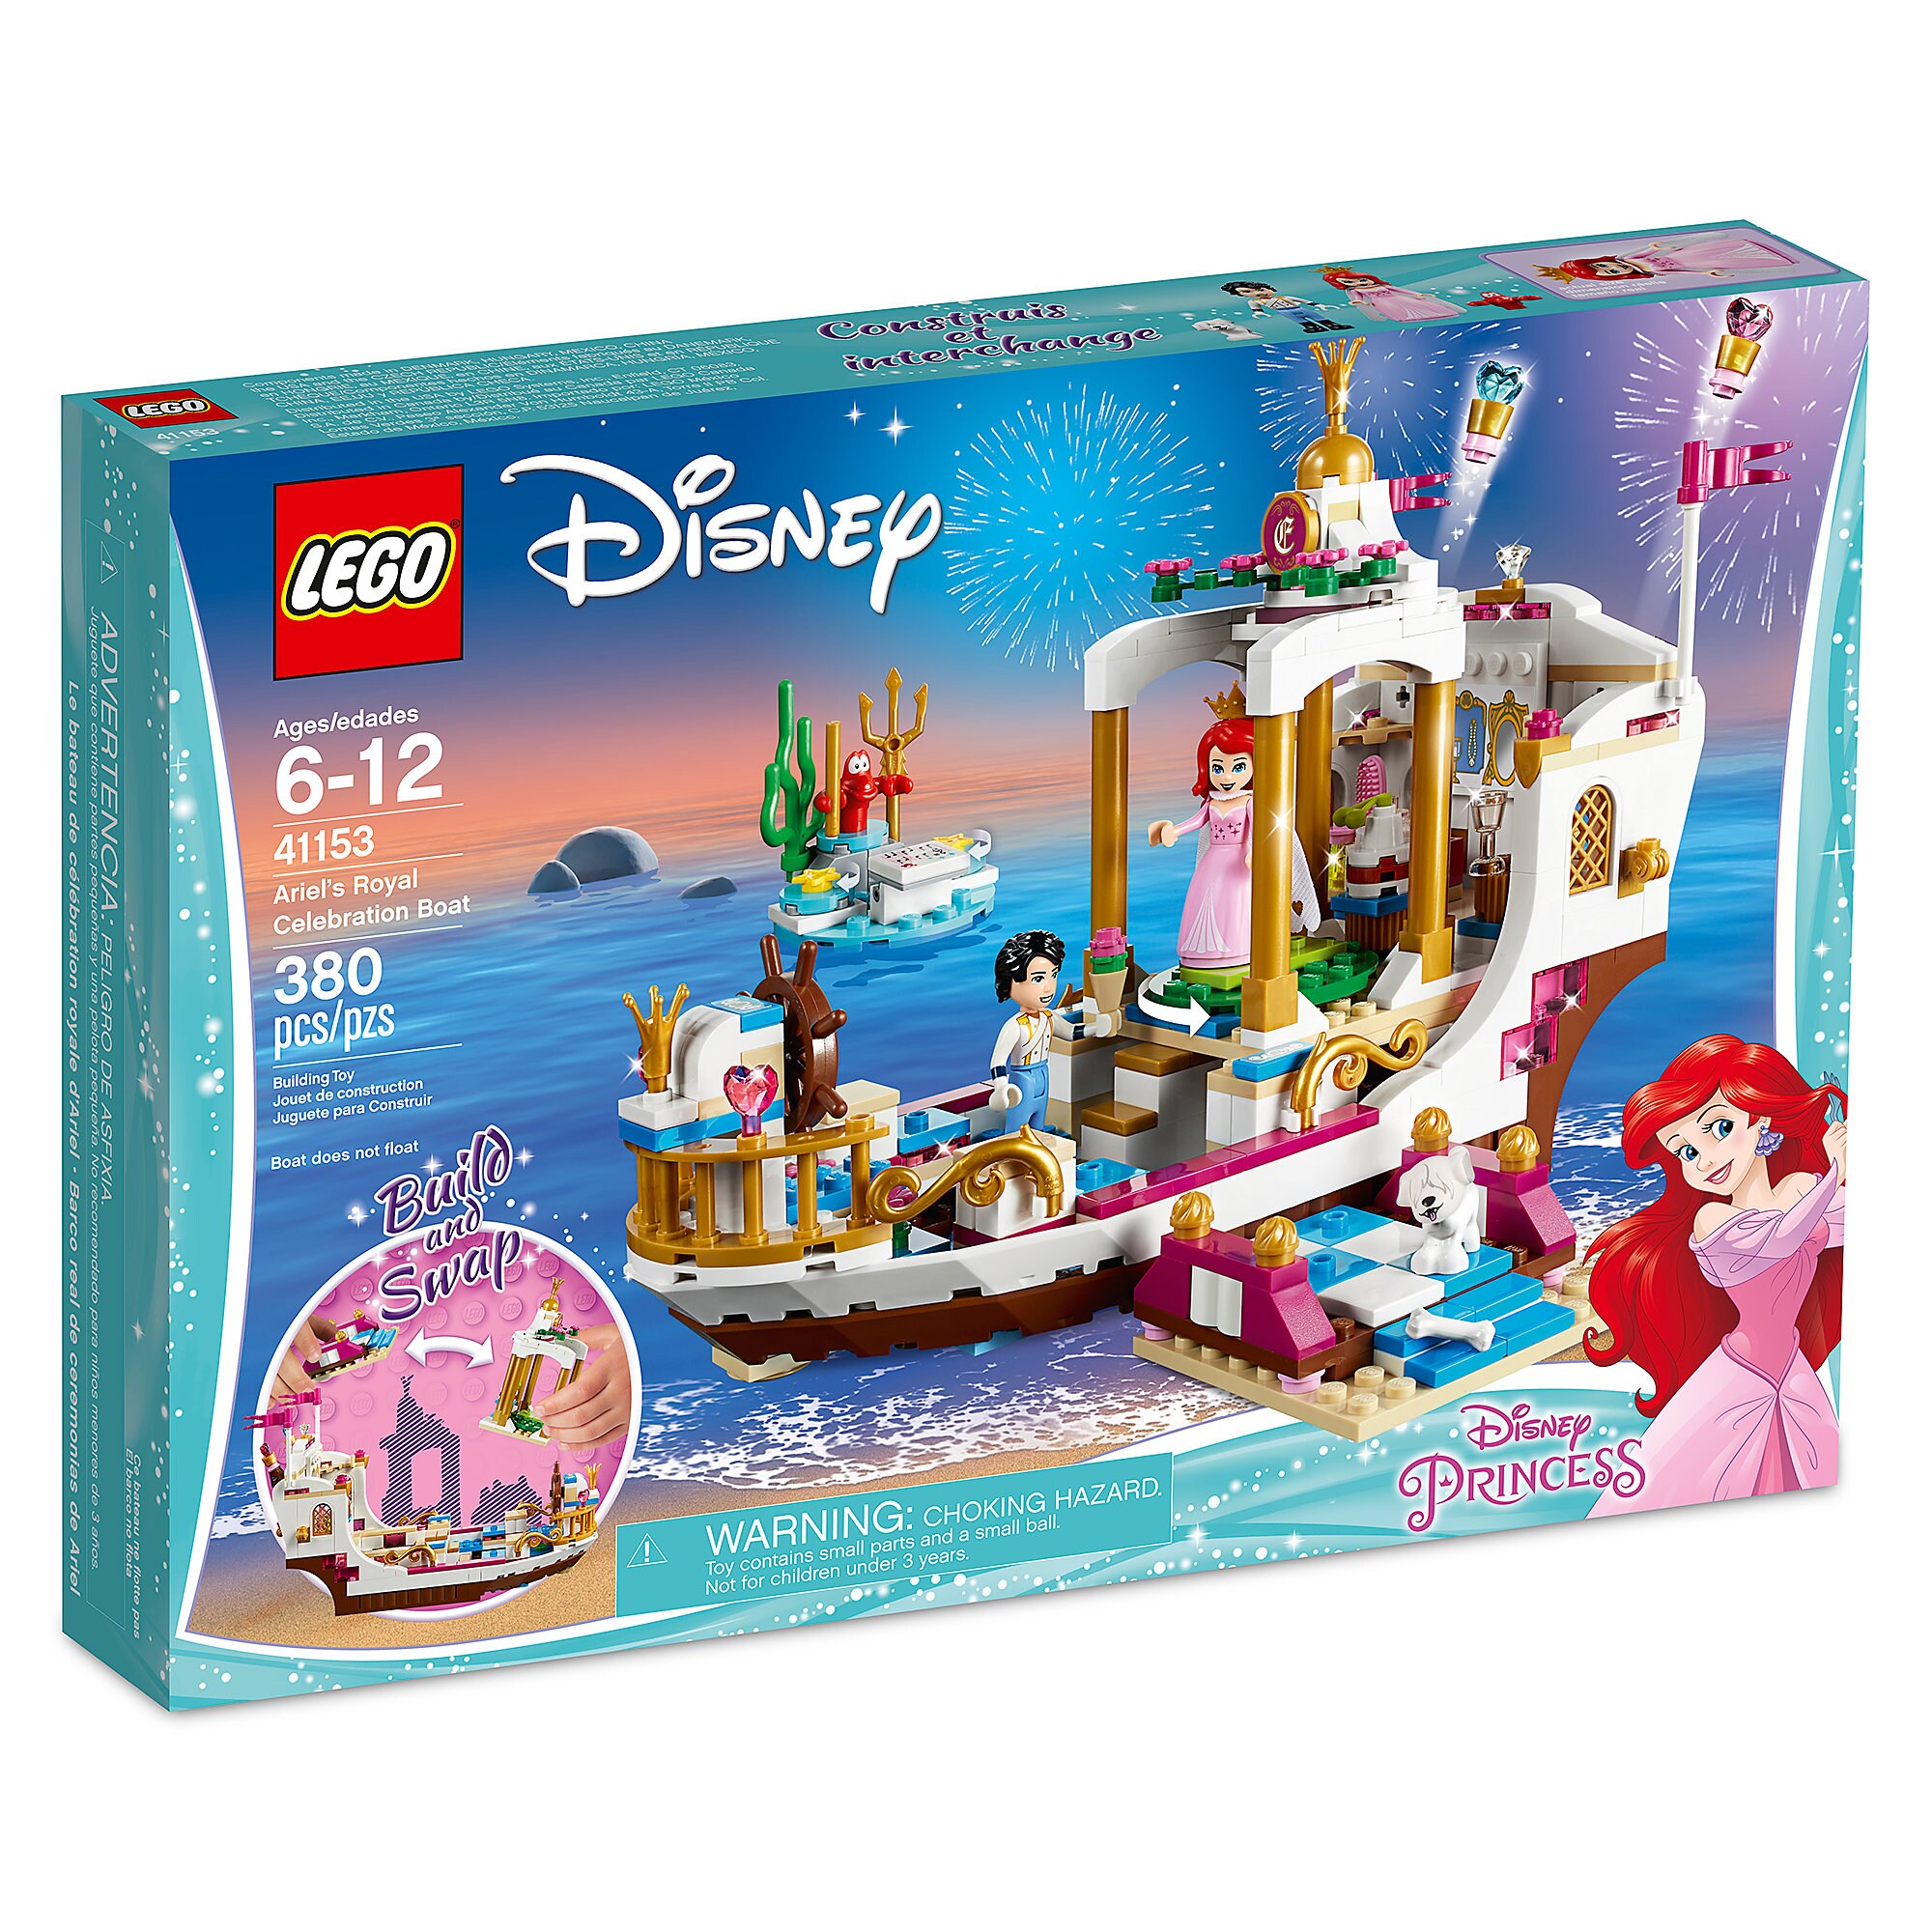 Ariel's Royal Celebration Boat Playset by LEGO